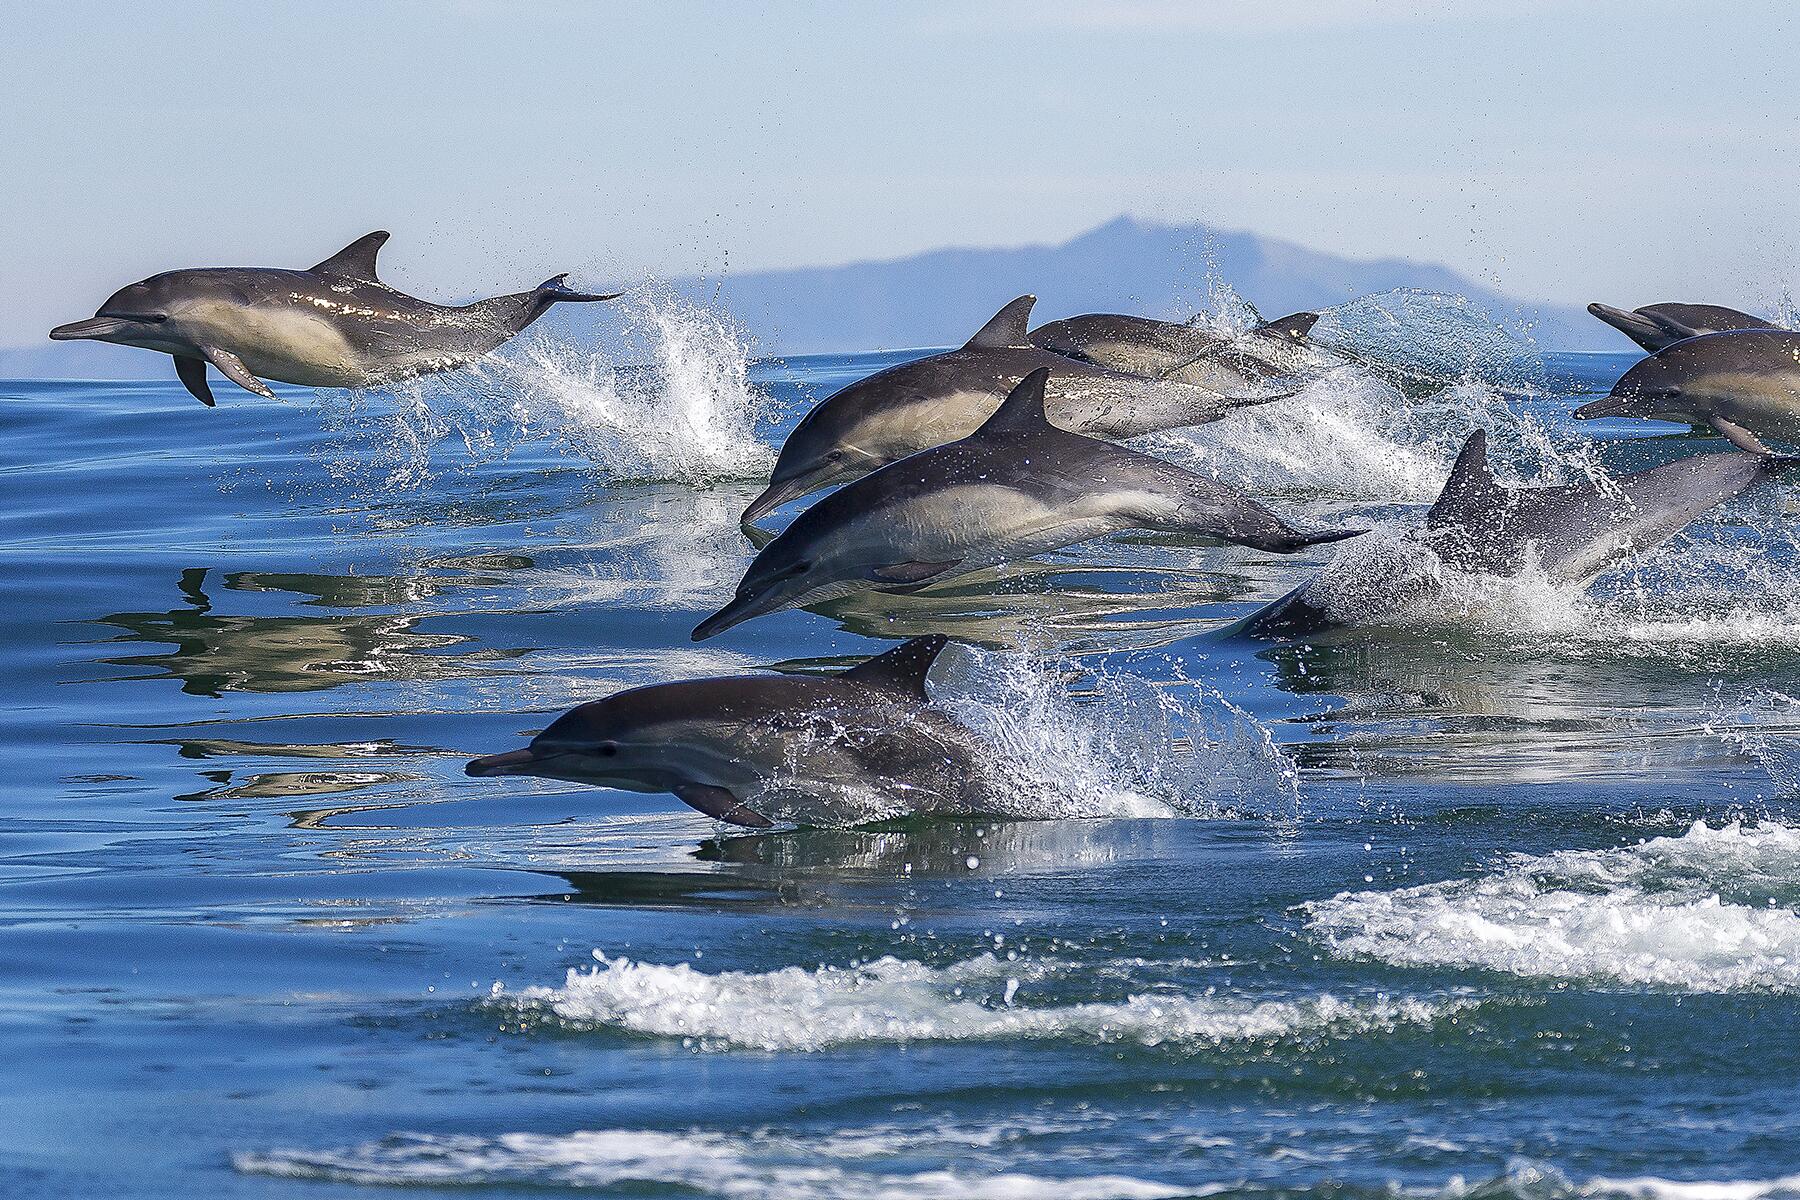 Wildlife and Sea Life That Live Off California's Coast